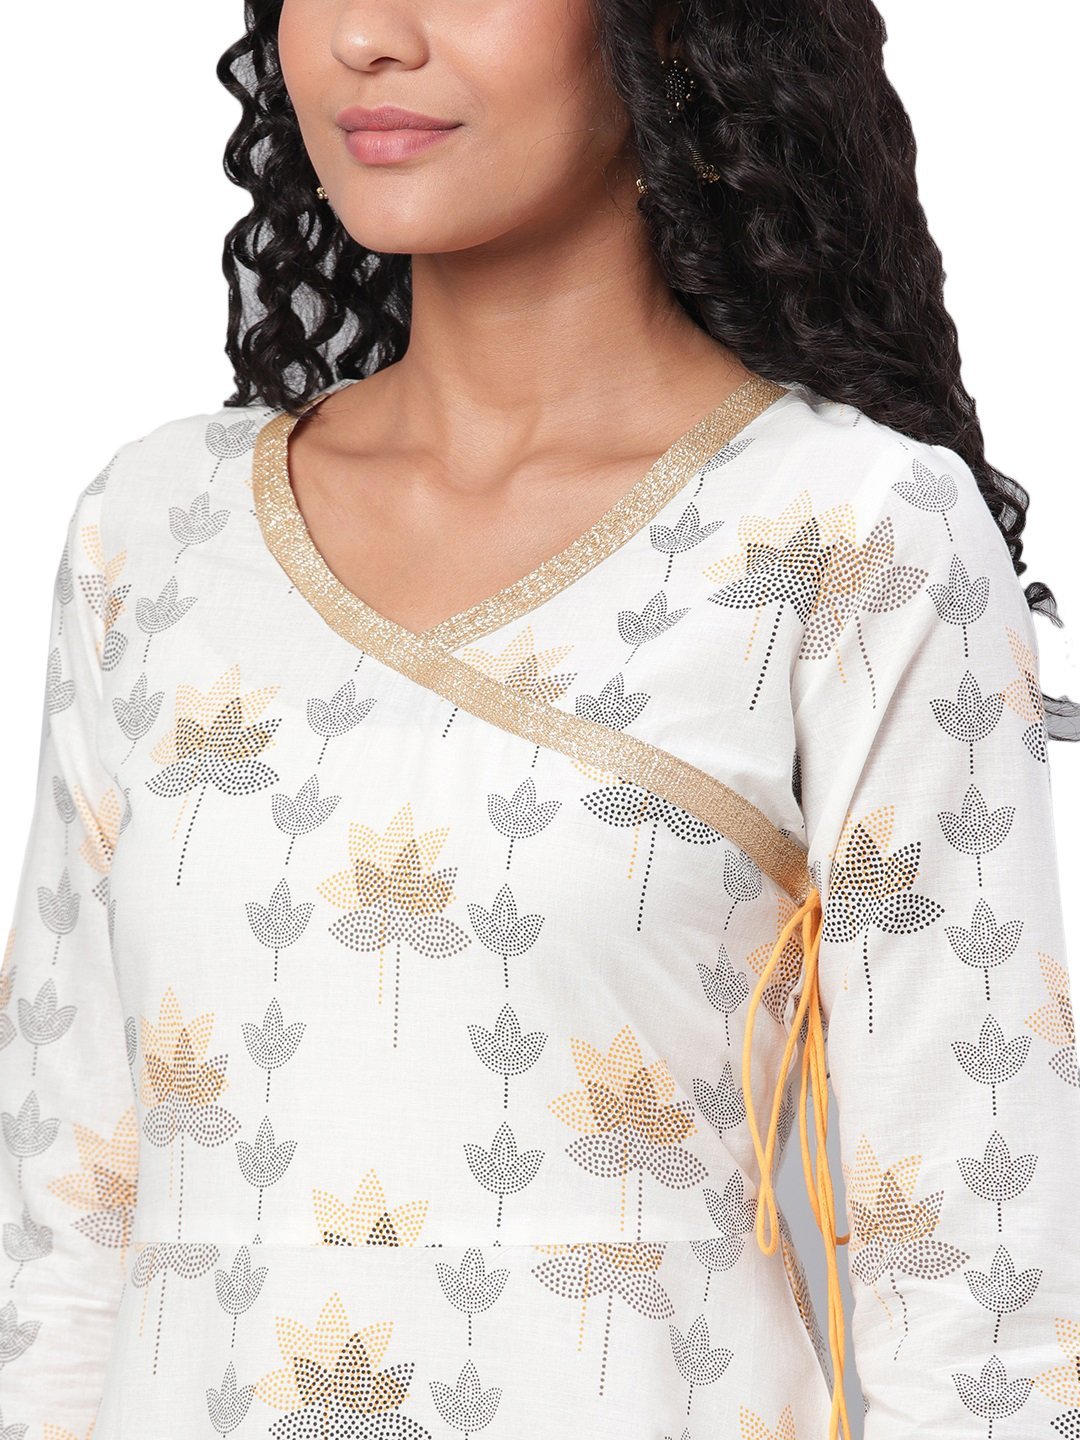 Women's Multi Printed 3/4 Sleeve Cotton V Neck Dress - Myshka